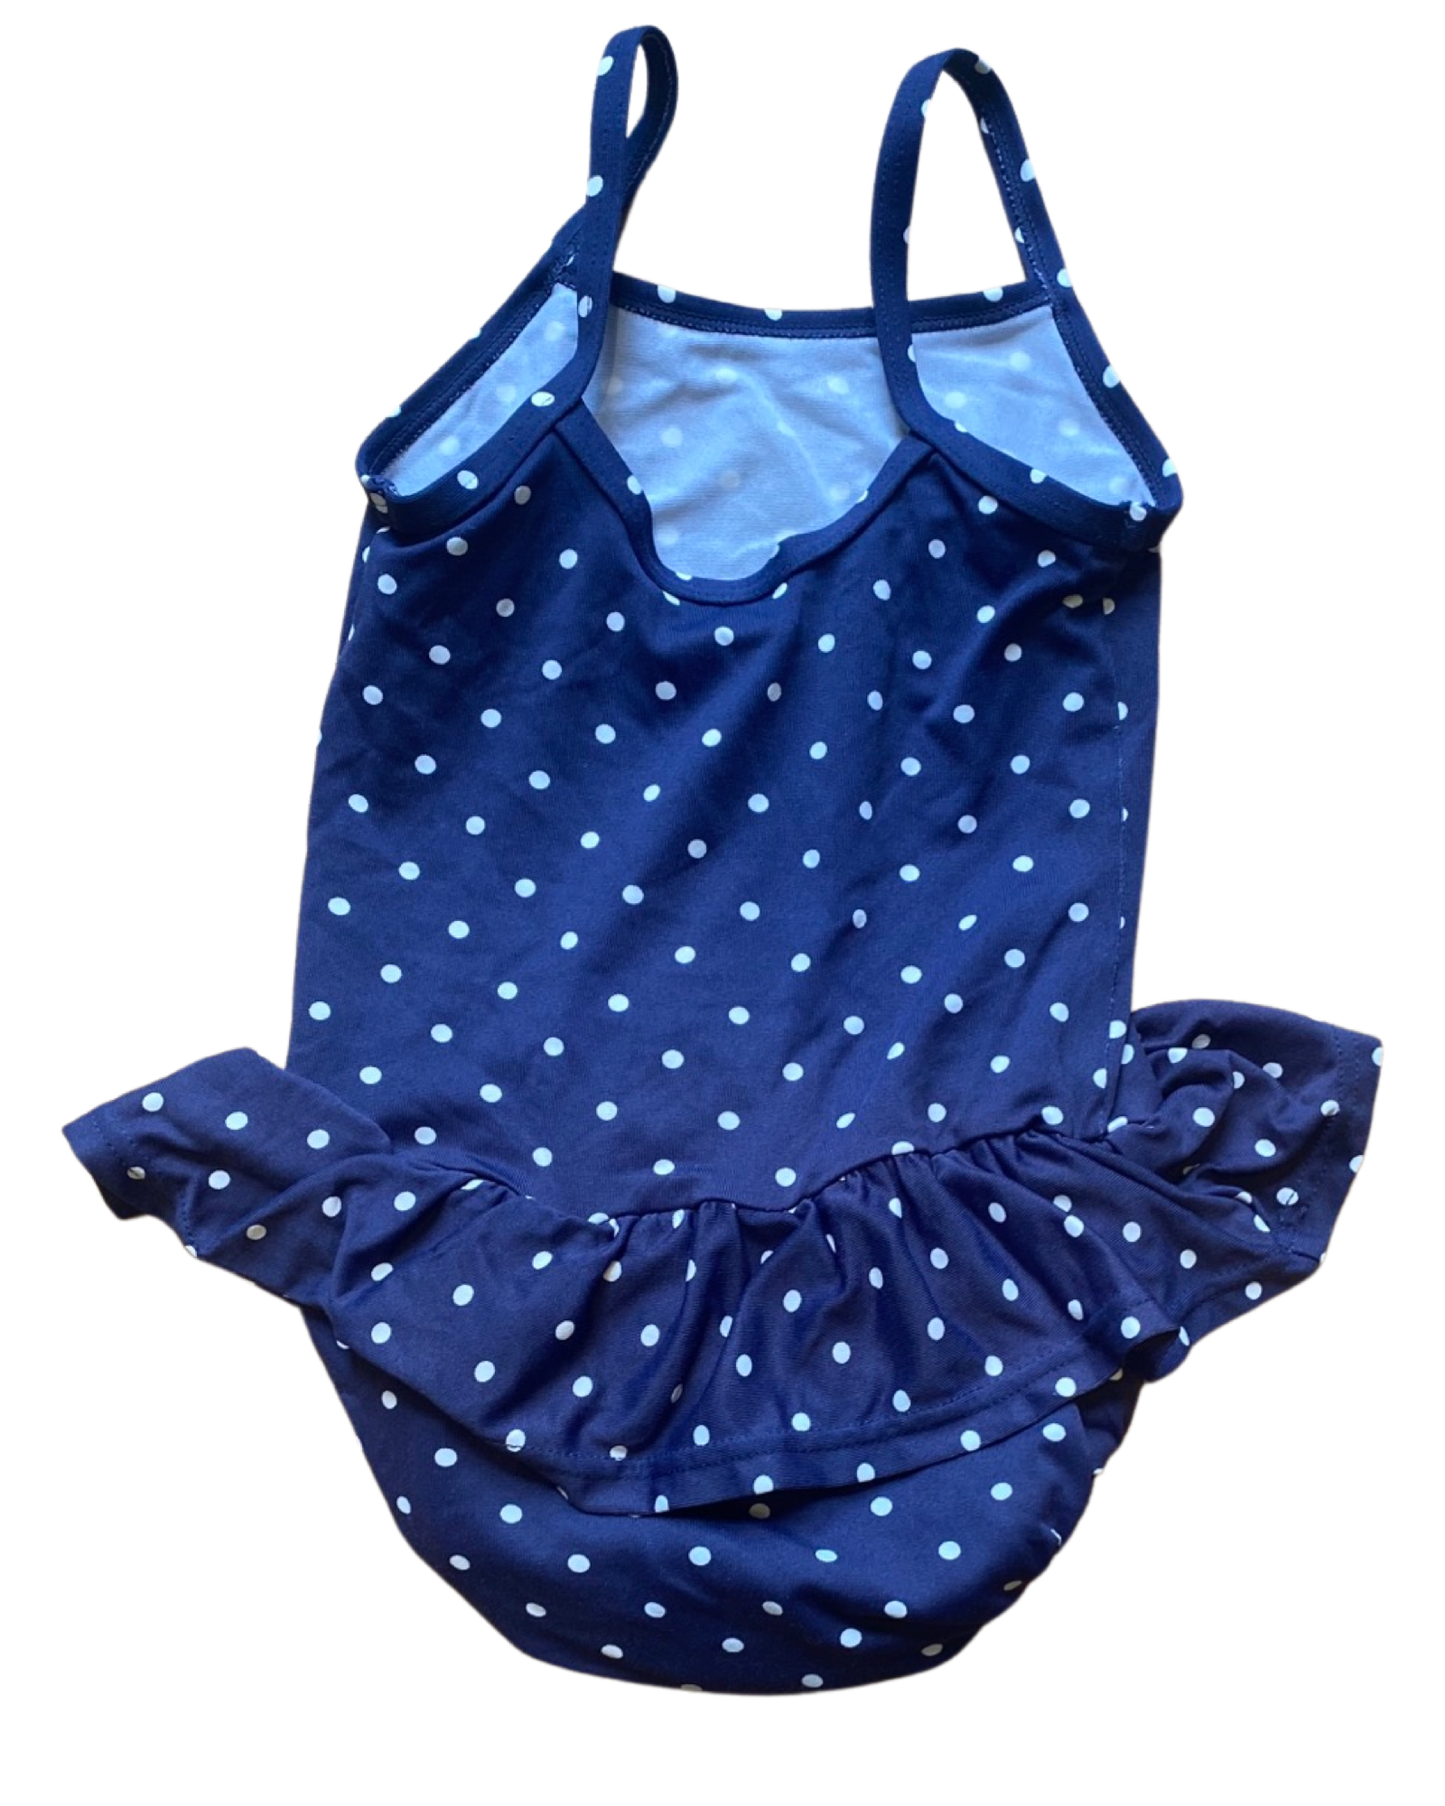 JoJo Maman Bebe dotty print swimsuit (size 6-12mths)